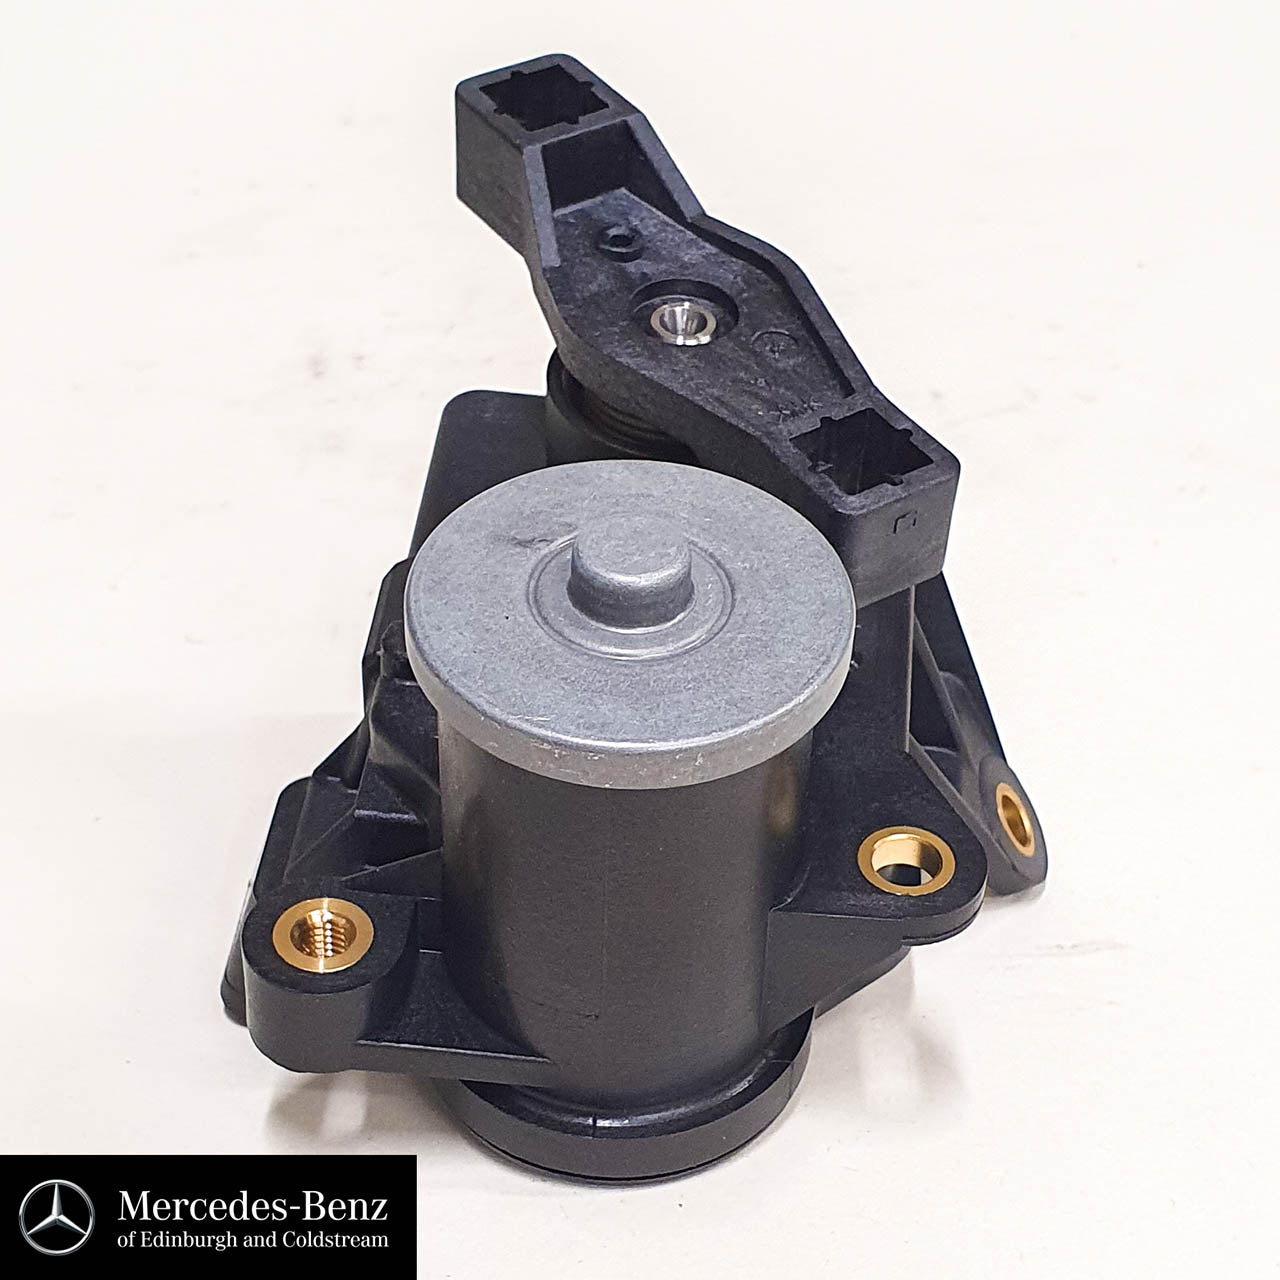 Genuine Mercedes-Benz Inlet Port Shut Off actuator motor Mercedes OM642 Engines